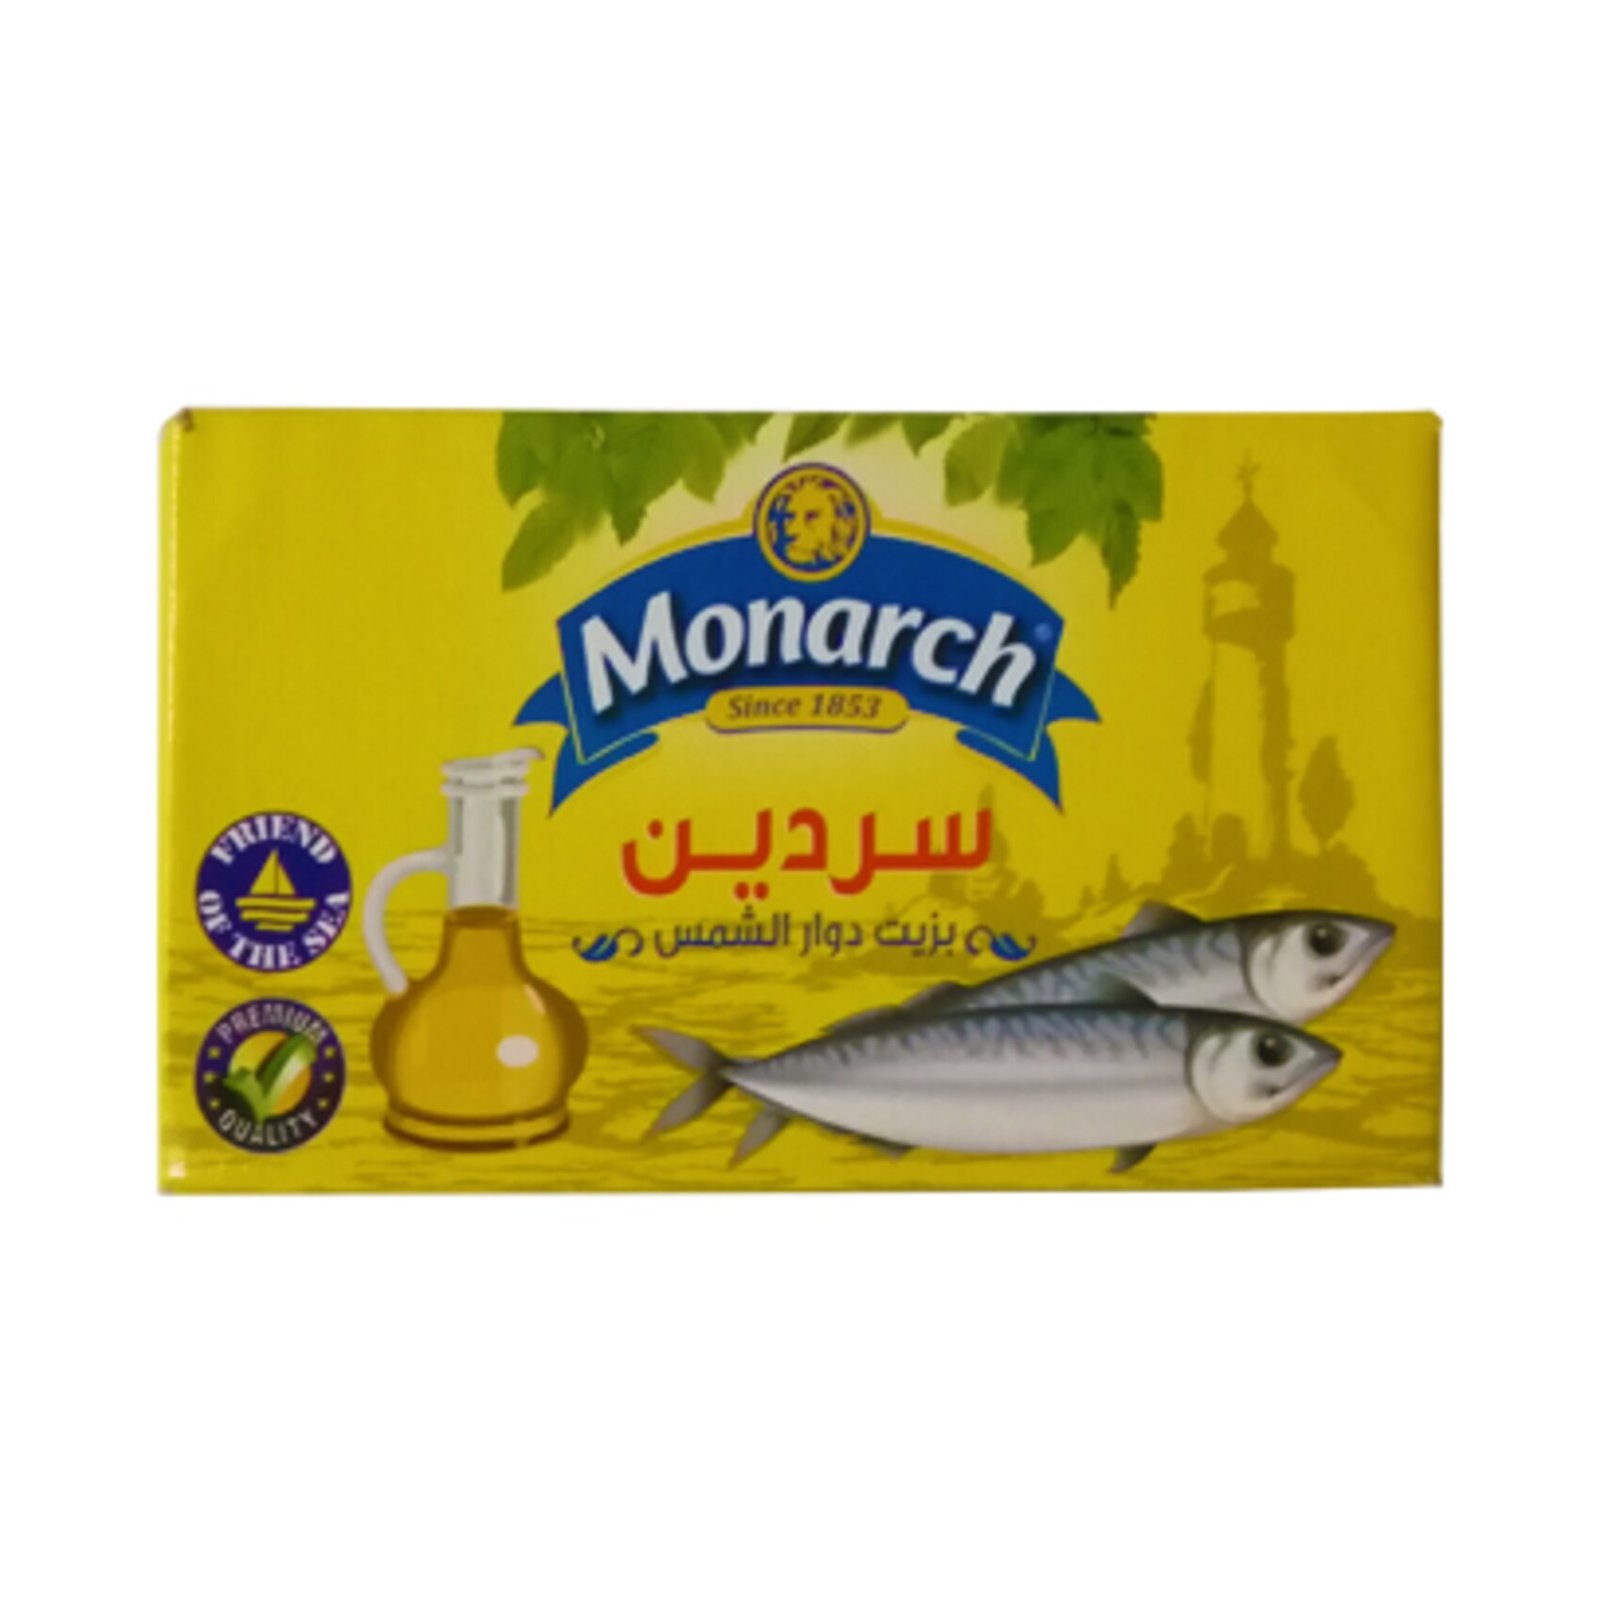 Sardines Vegetable Oil 125g (Monarch)